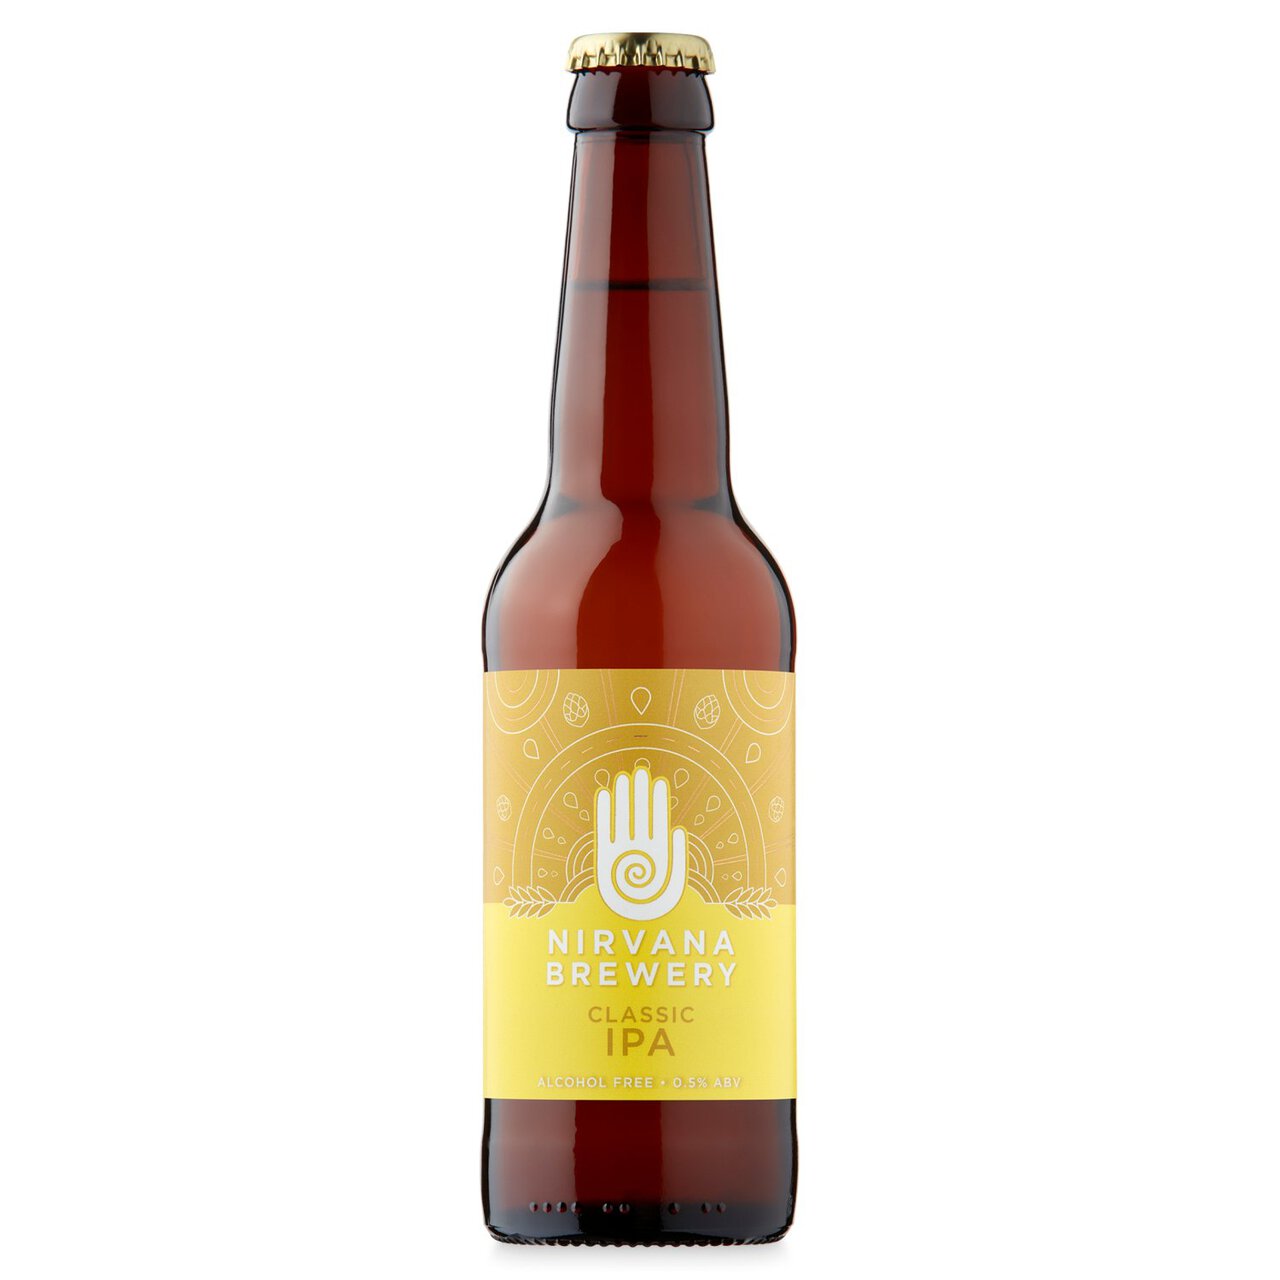 Nirvana Brewery alcohol-free Classic IPA 330ml